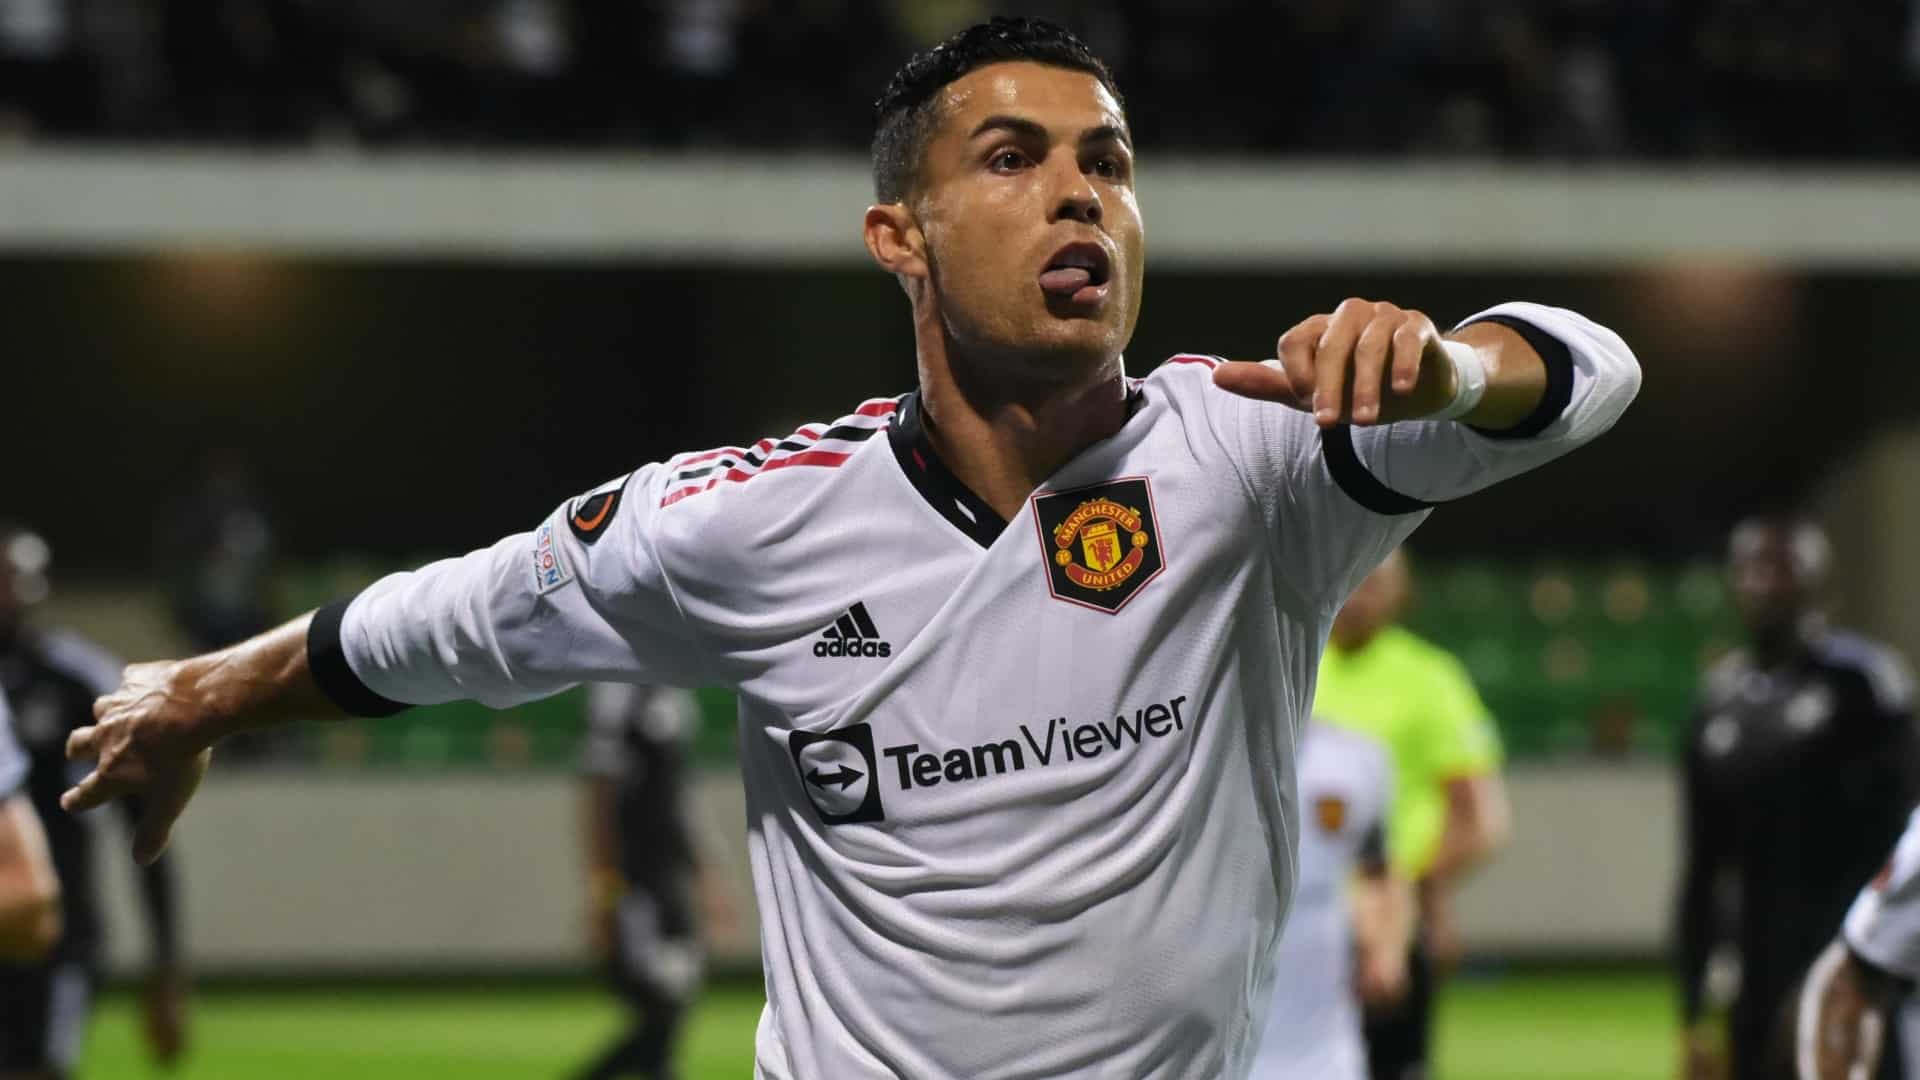 “Happy to score first Europa League goal” - Cristiano Ronaldo